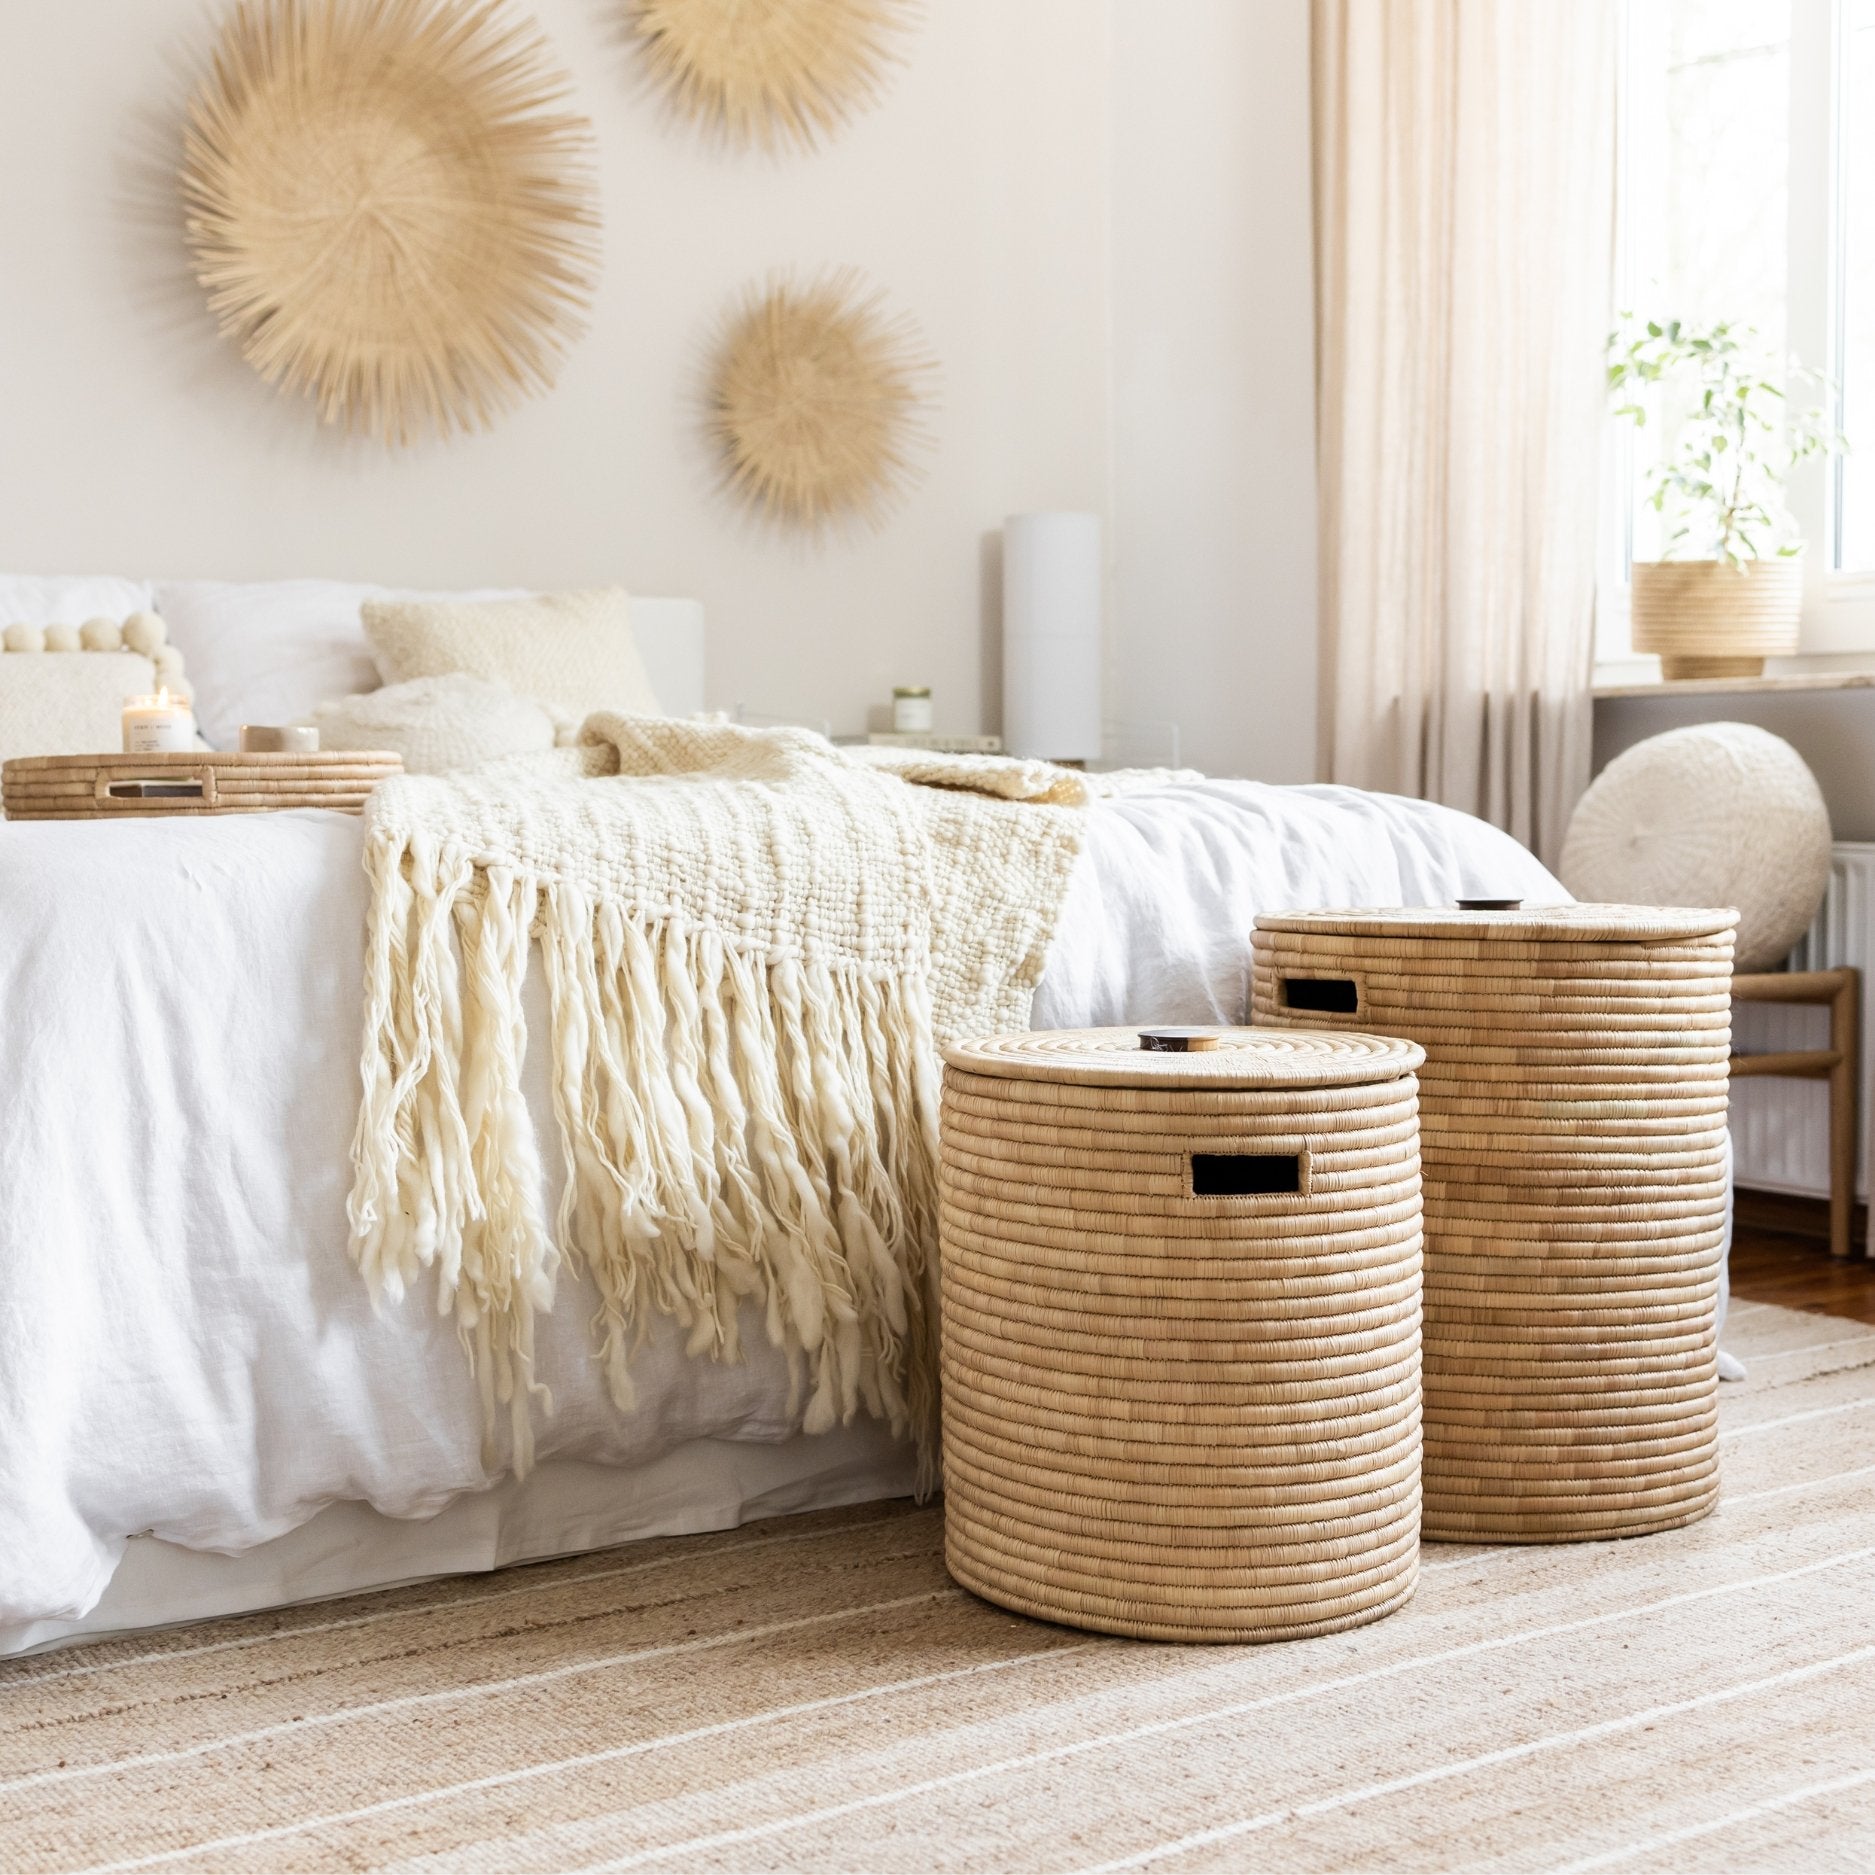 Palm fiber woven laundry baskets - By Native